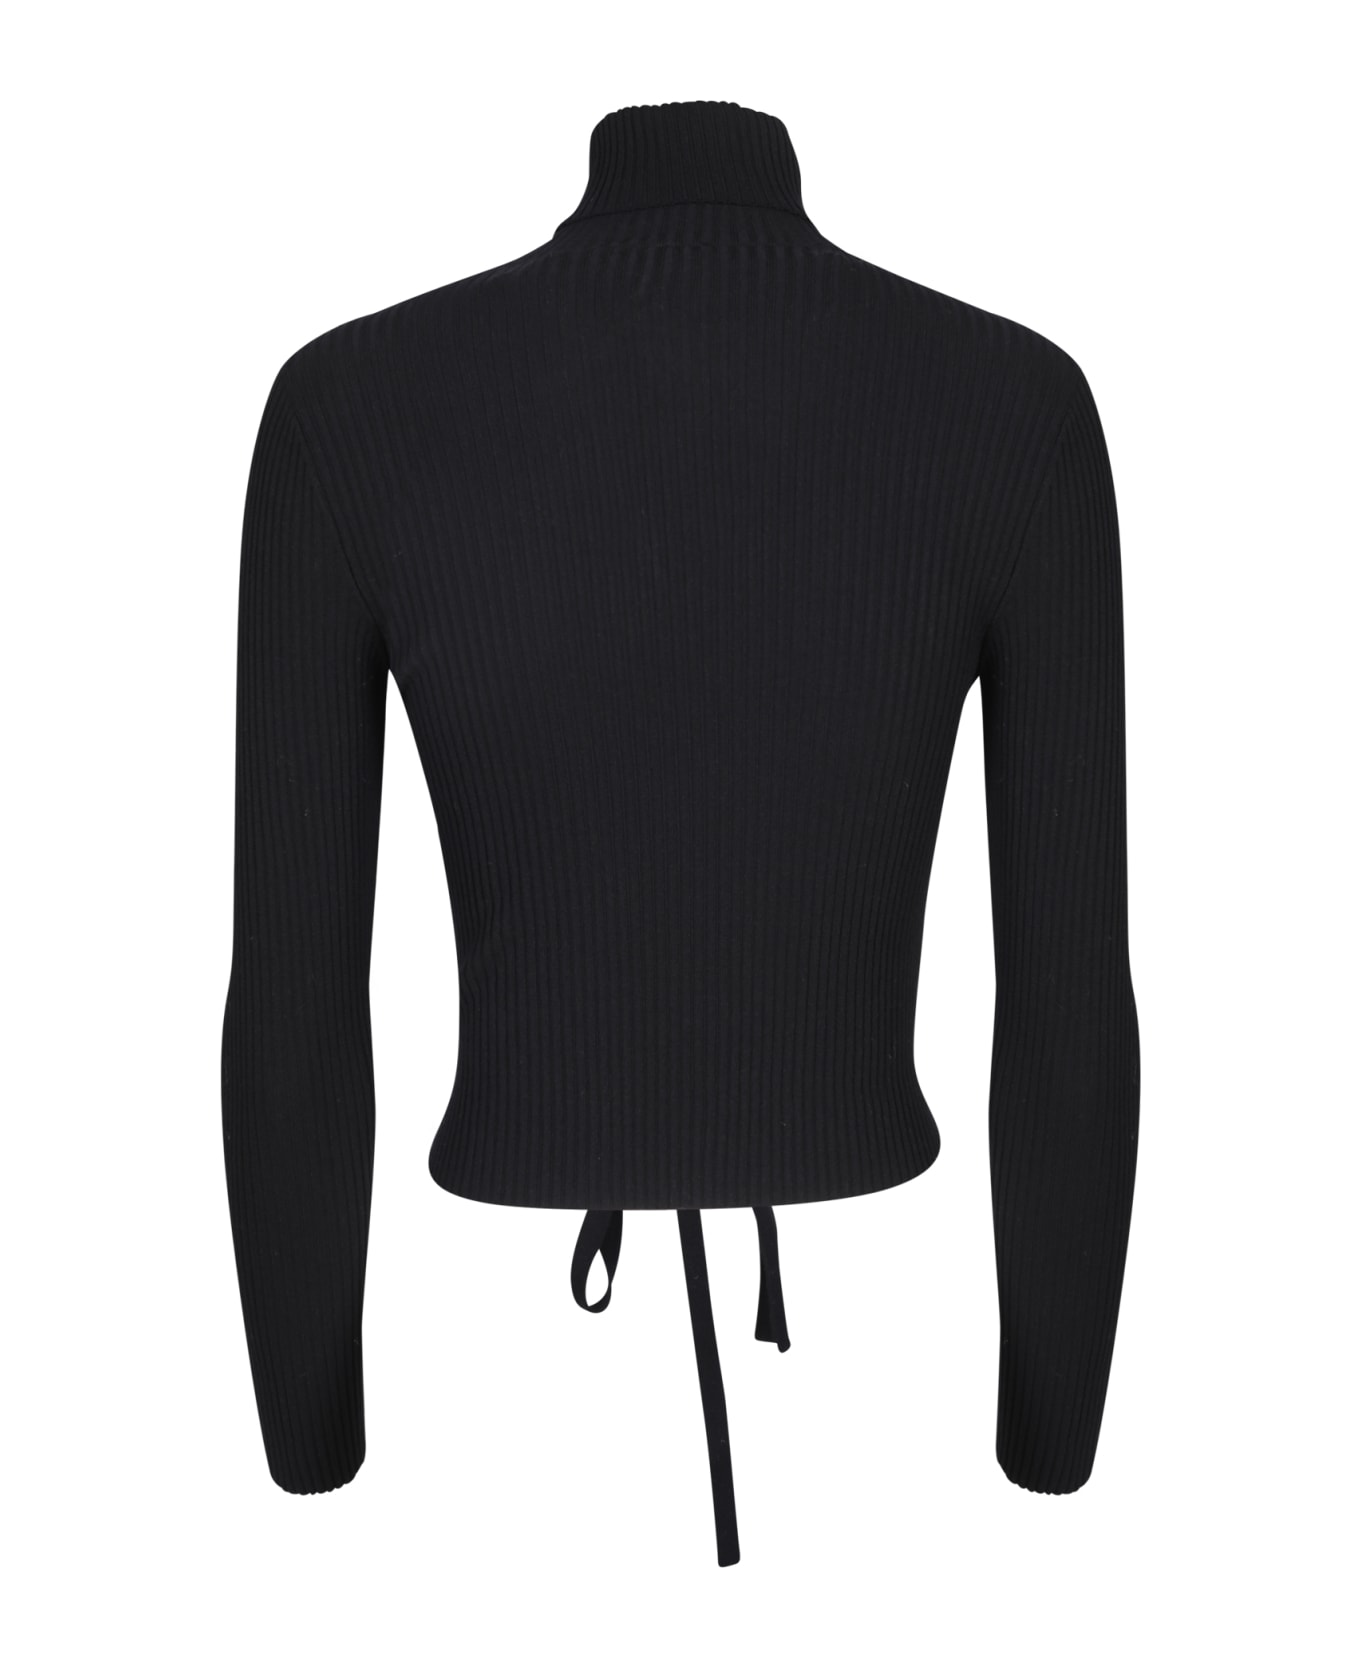 SSHEENA Black Lace-up Cropped Sweater - Black